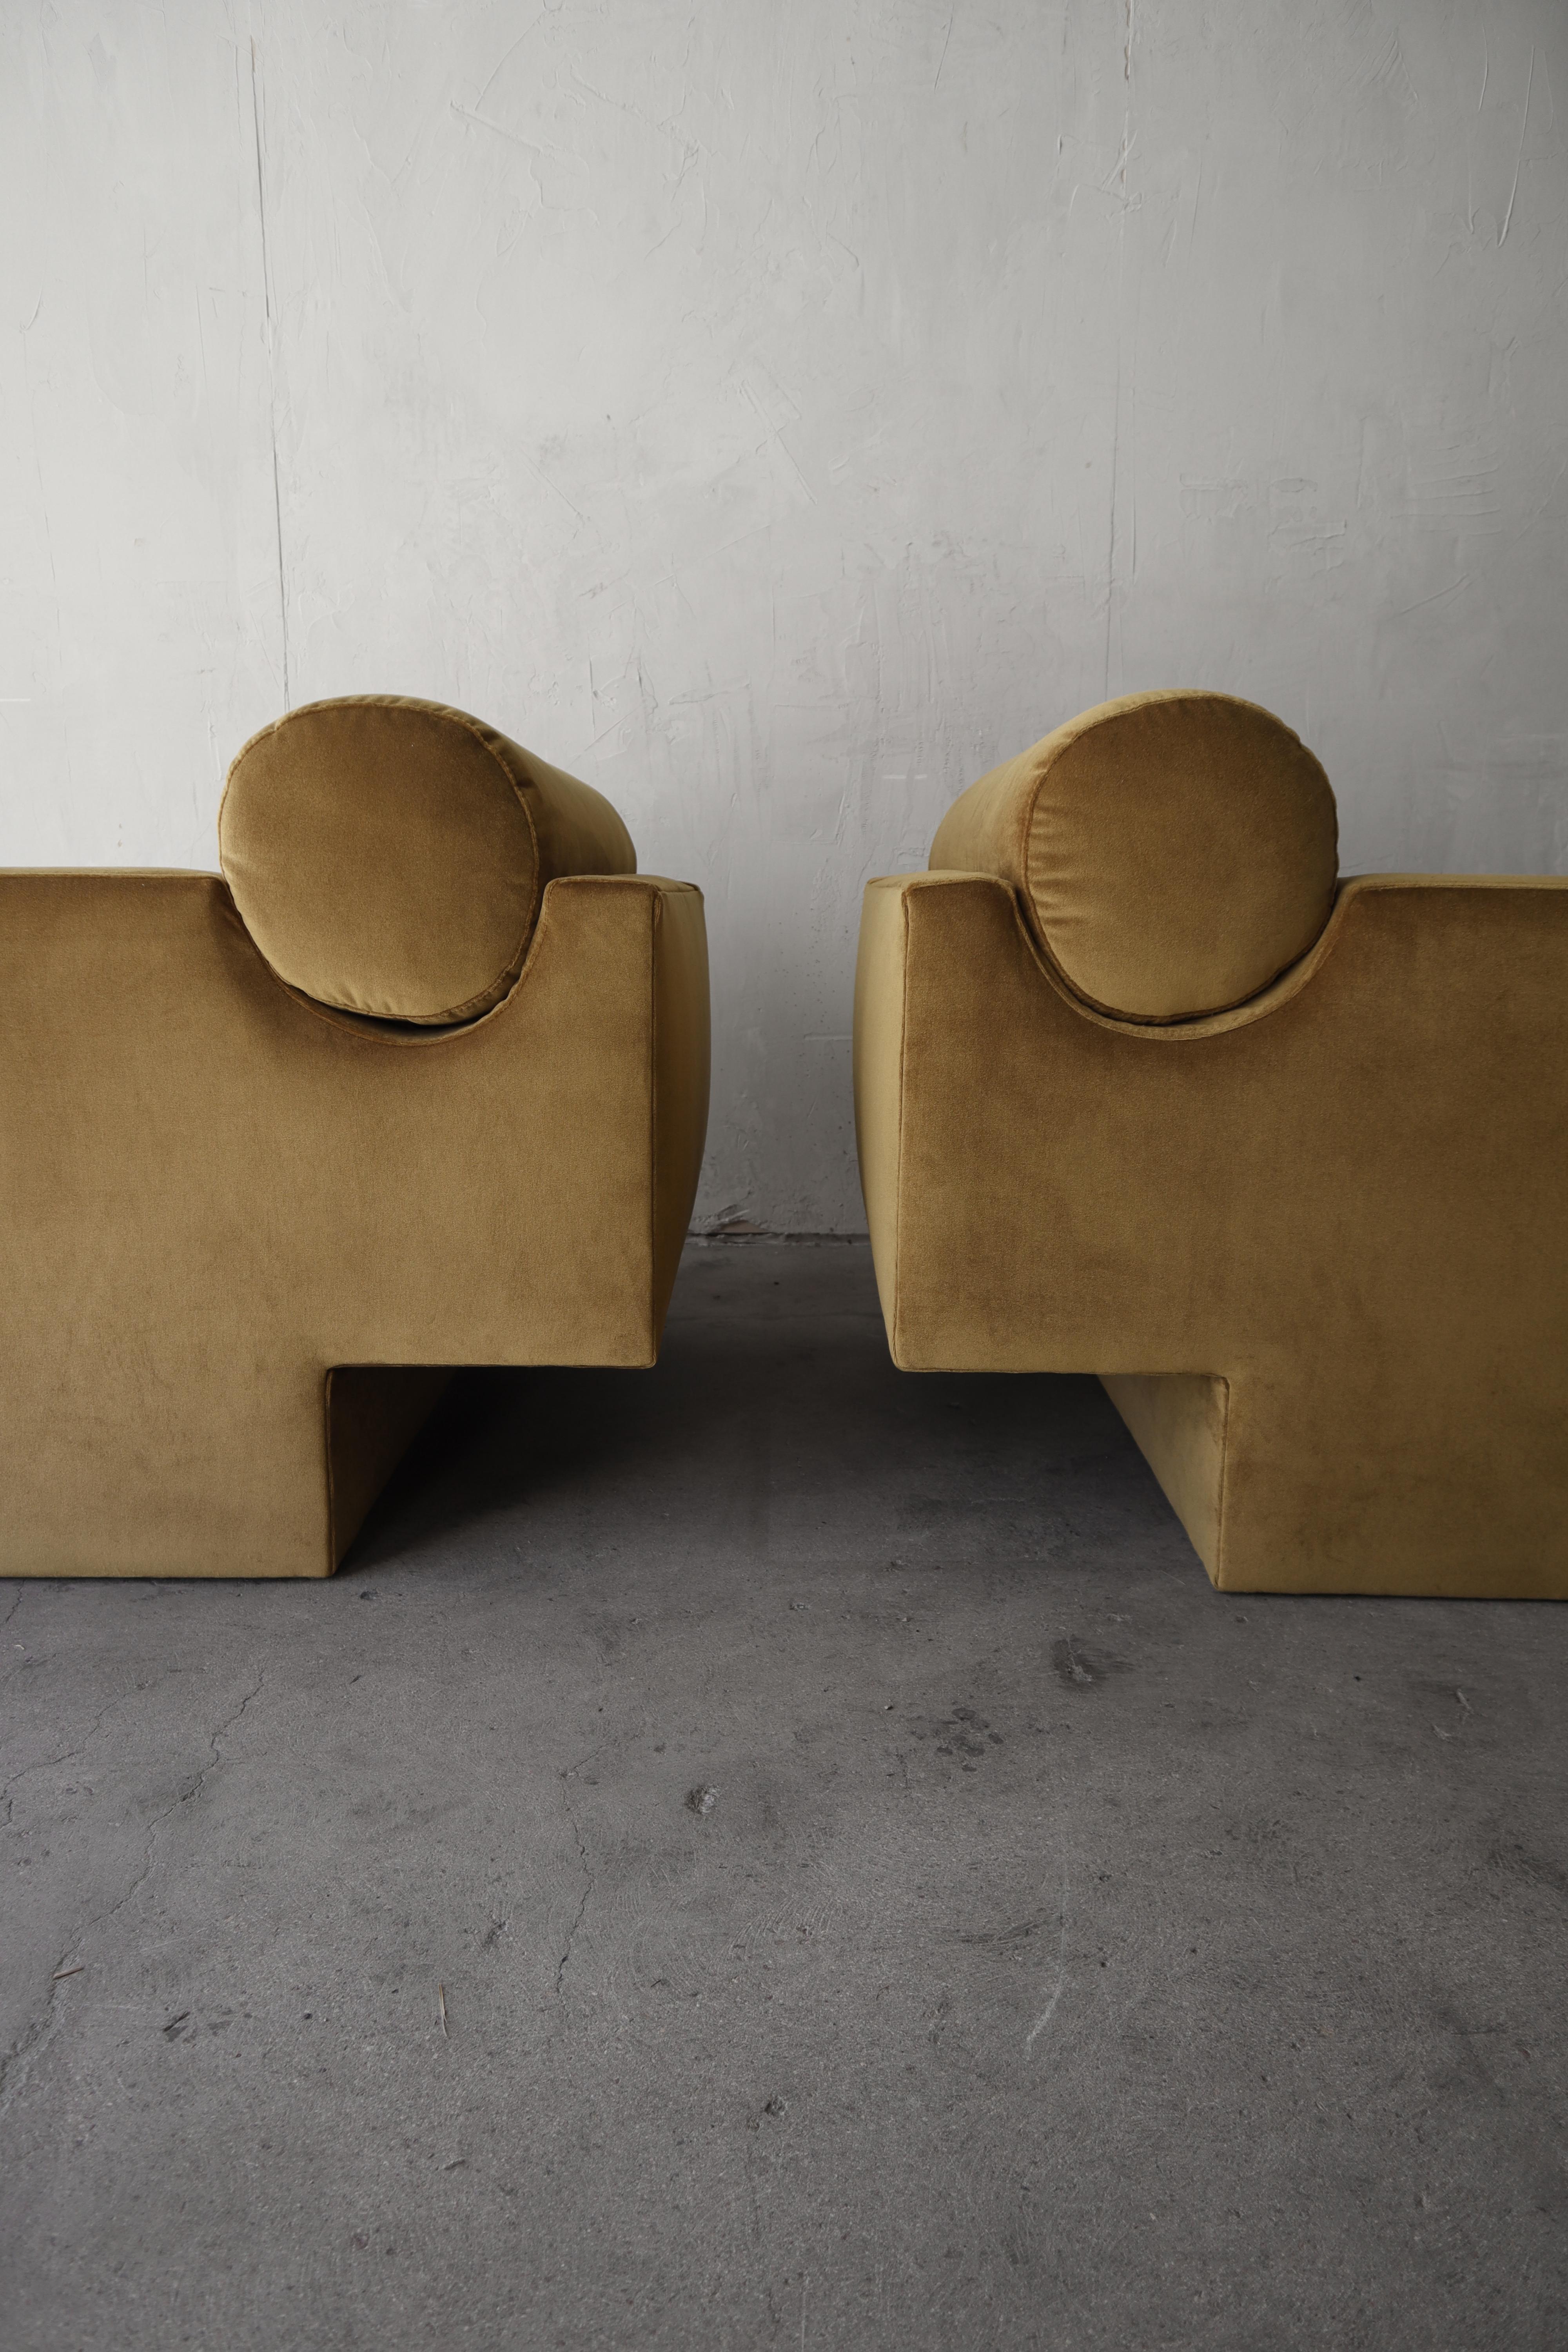 Pair of Sculptural Post Modern Lounge Chairs by Vladimir Kagan 1